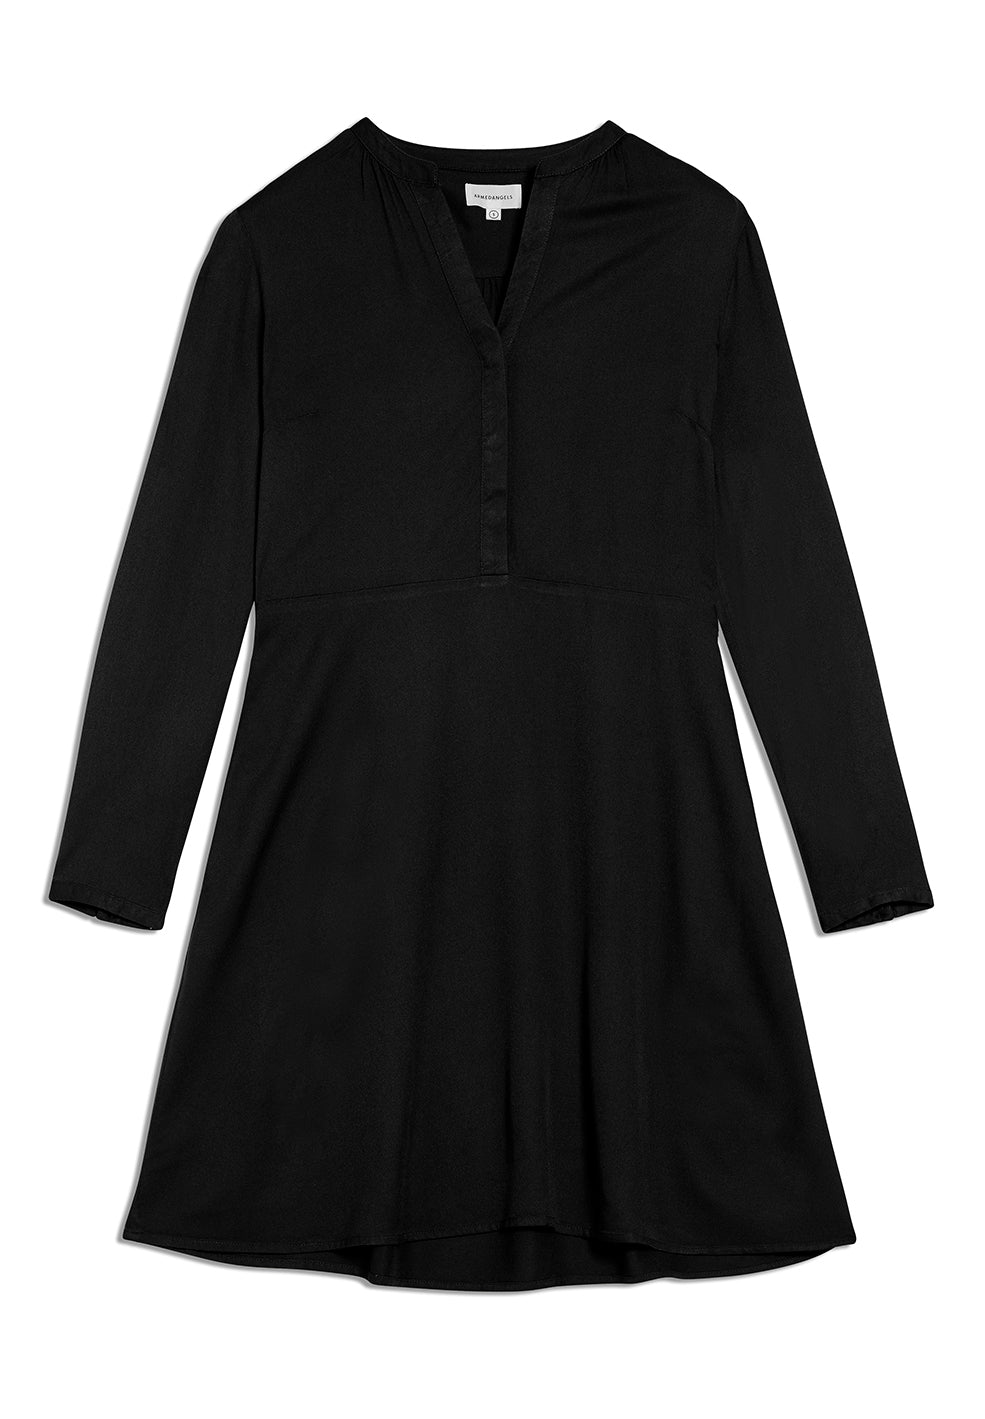 Inaari Black Long Sleeve Dress in Lenzing Ecovero